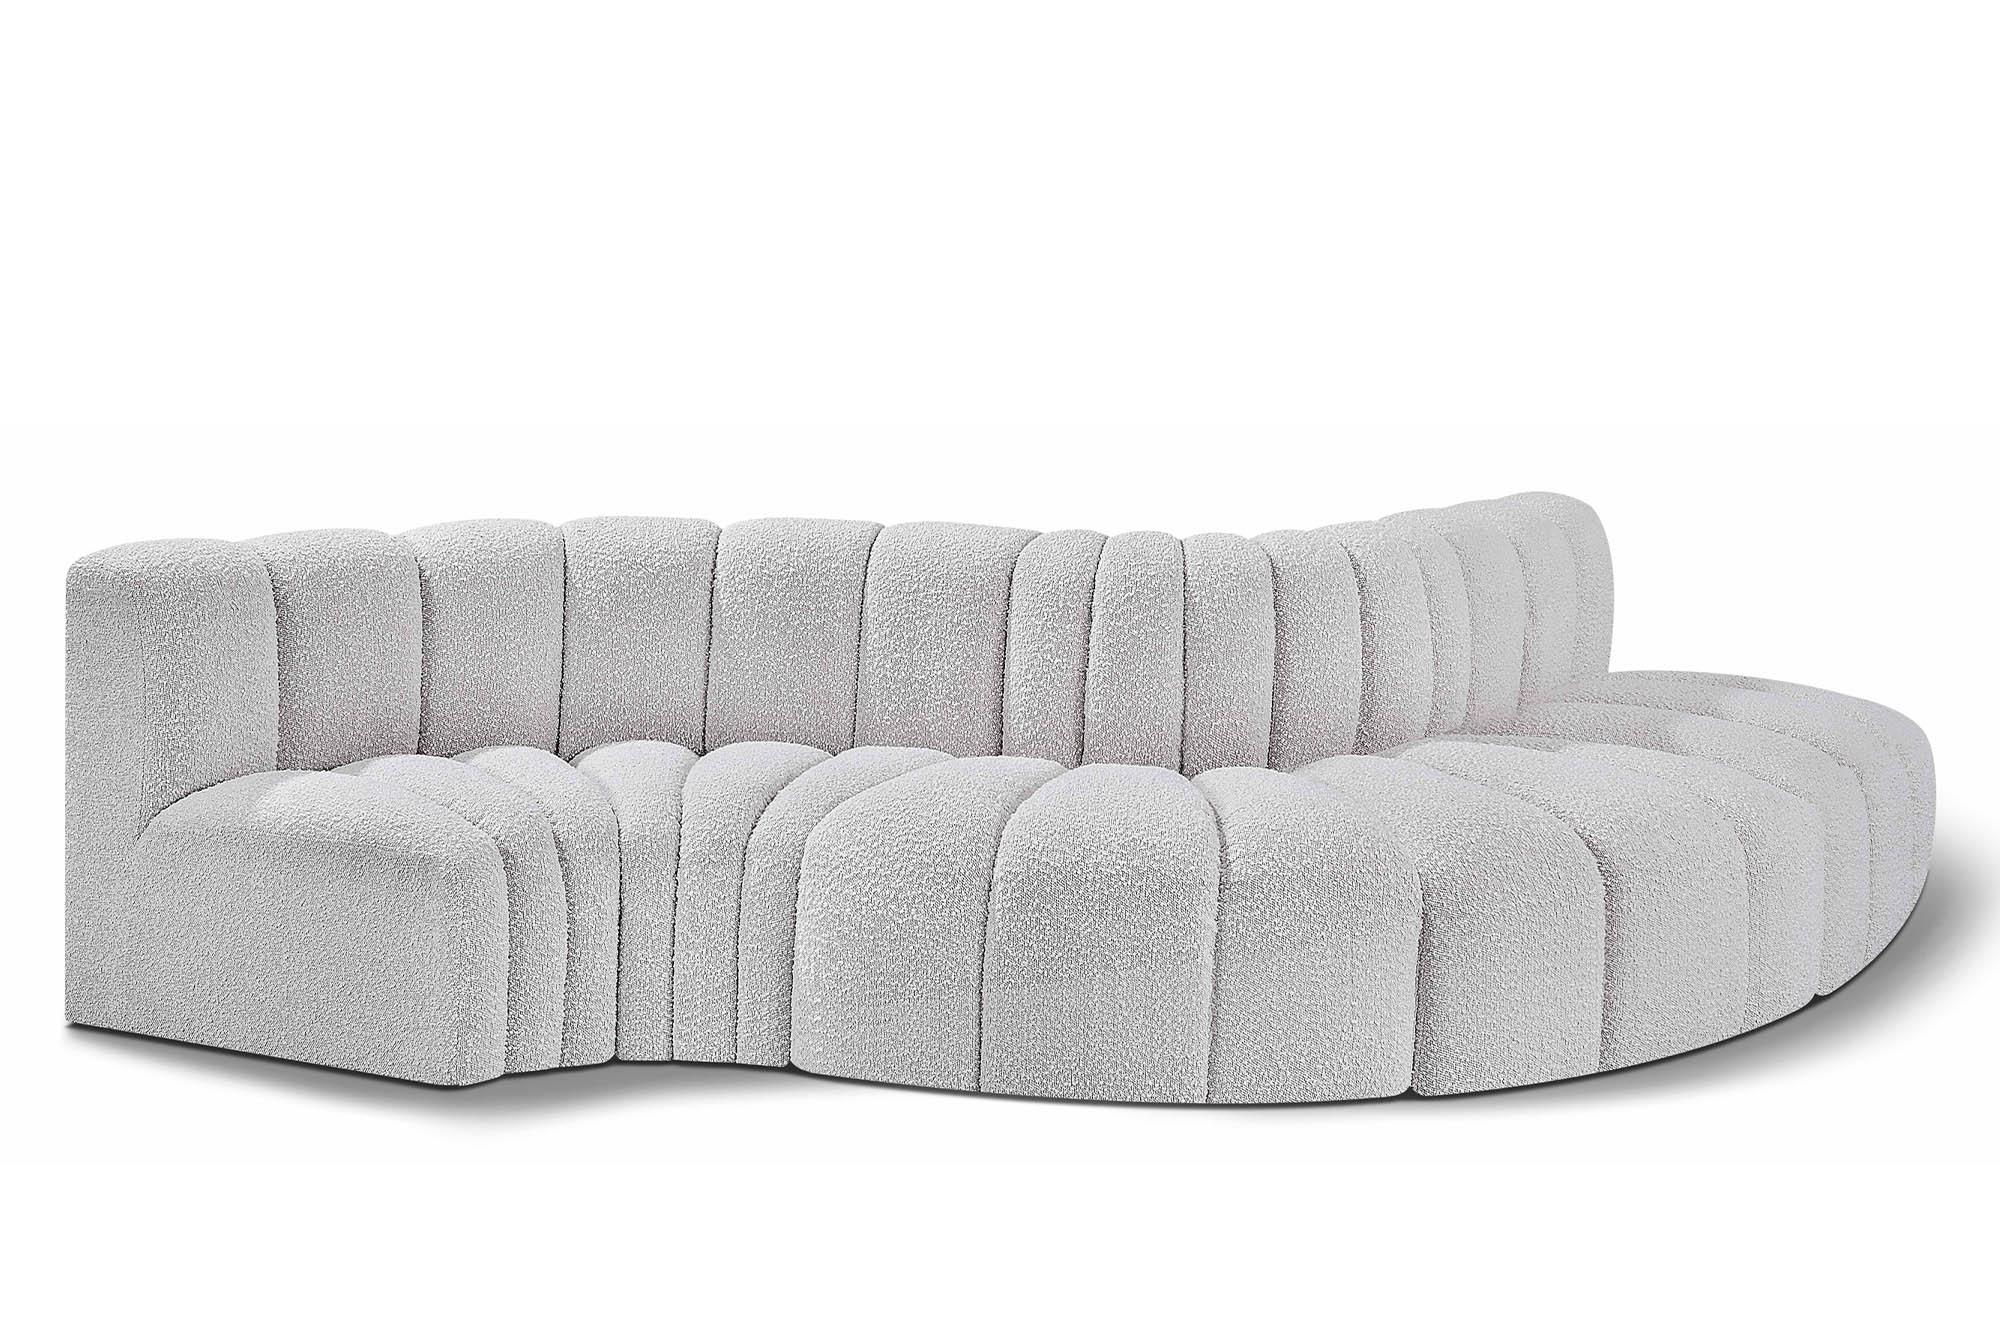 Contemporary, Modern Modular Sectional Sofa ARC 102Grey-S5B 102Grey-S5B in Gray 